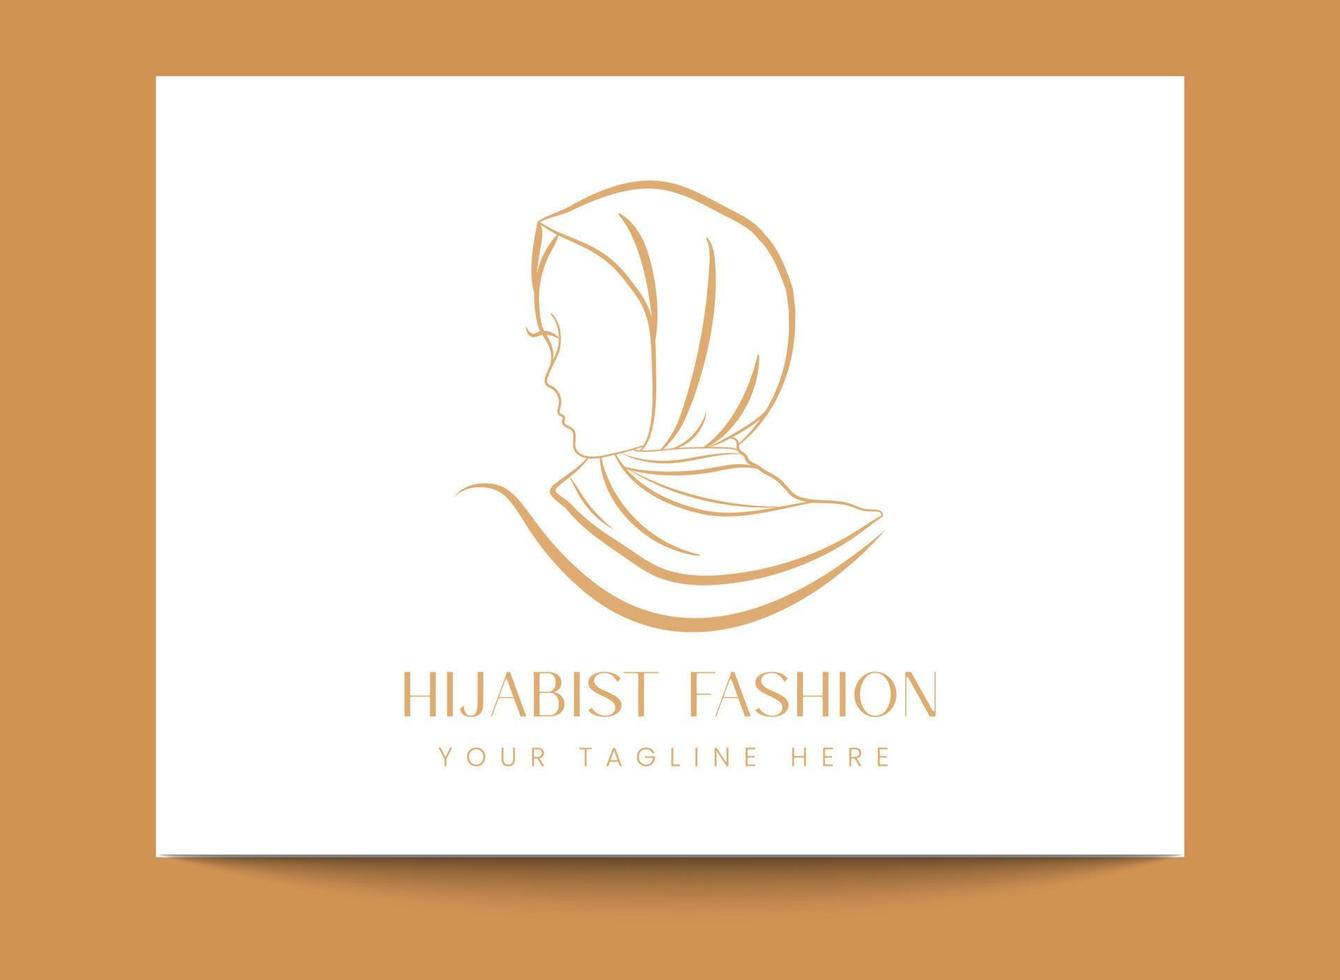 linear art creative simple minimal Muslim  women wearing hijab  emblem logo template for hijab fashion , modest fashion or beauty vector